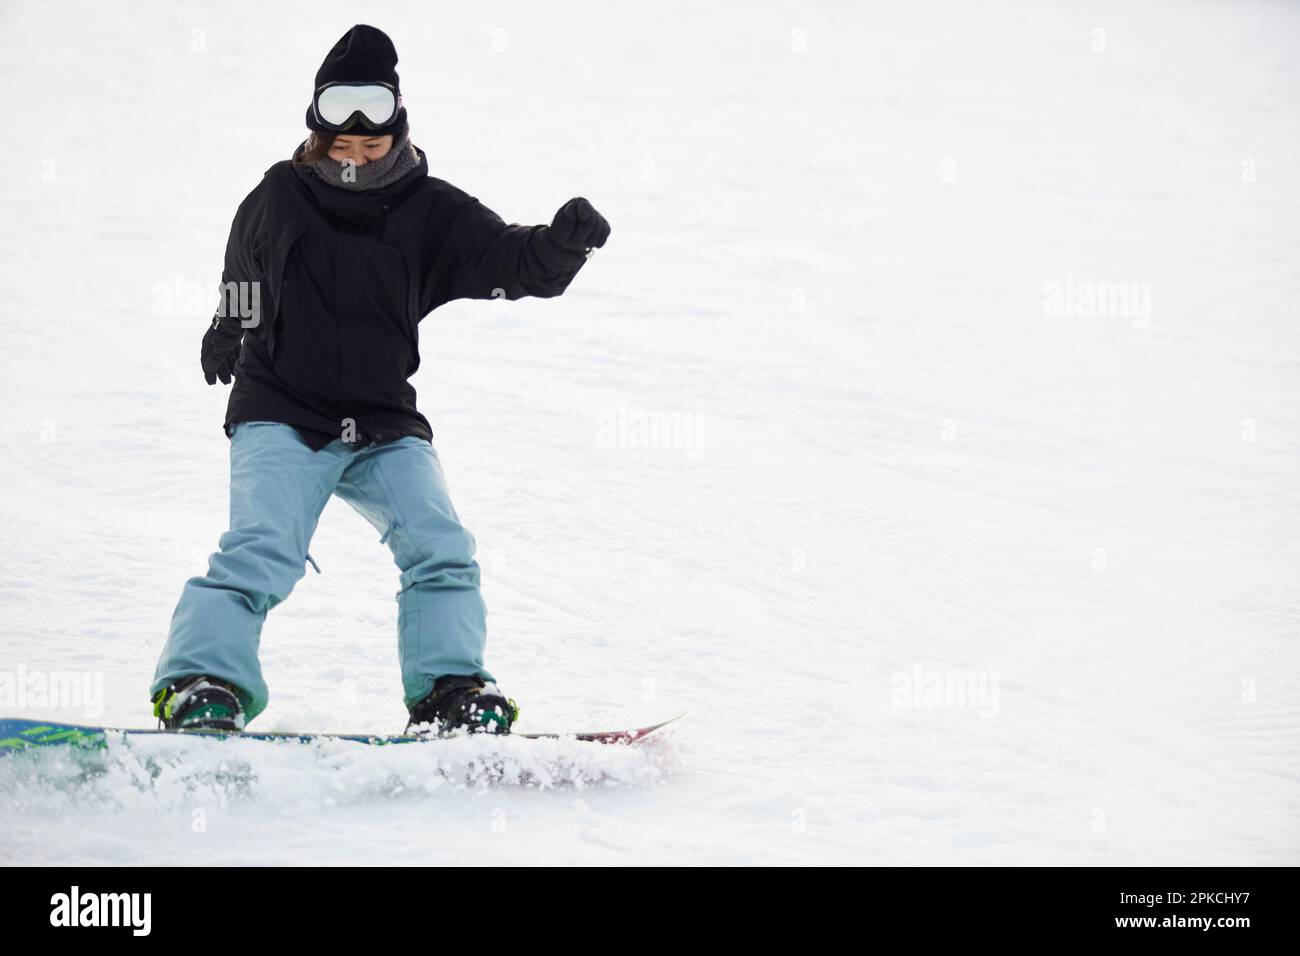 Woman snowboarding Stock Photo